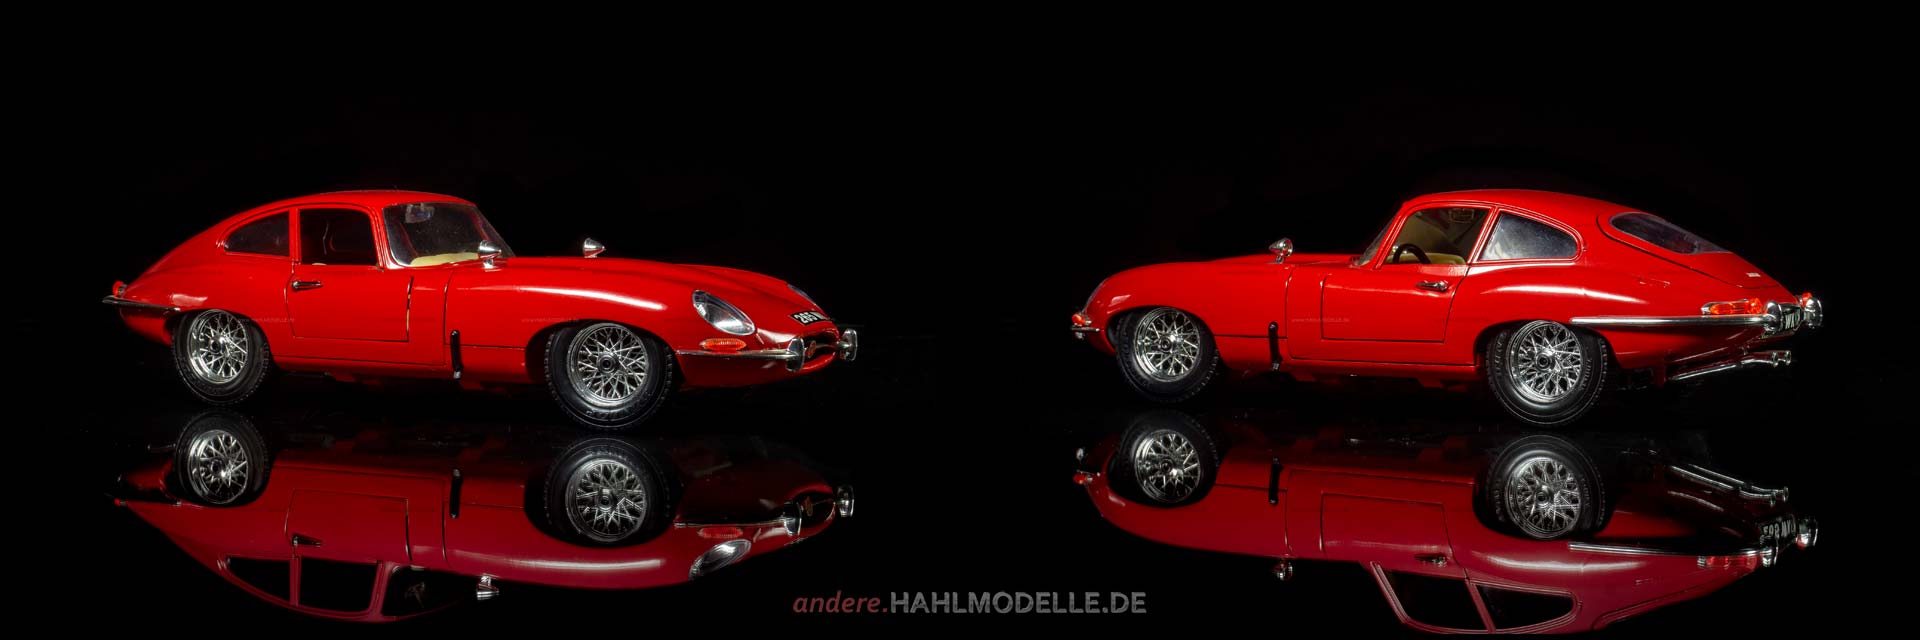 Jaguar E-Type | Coupé | Bburago | www.andere.hahlmodelle.de